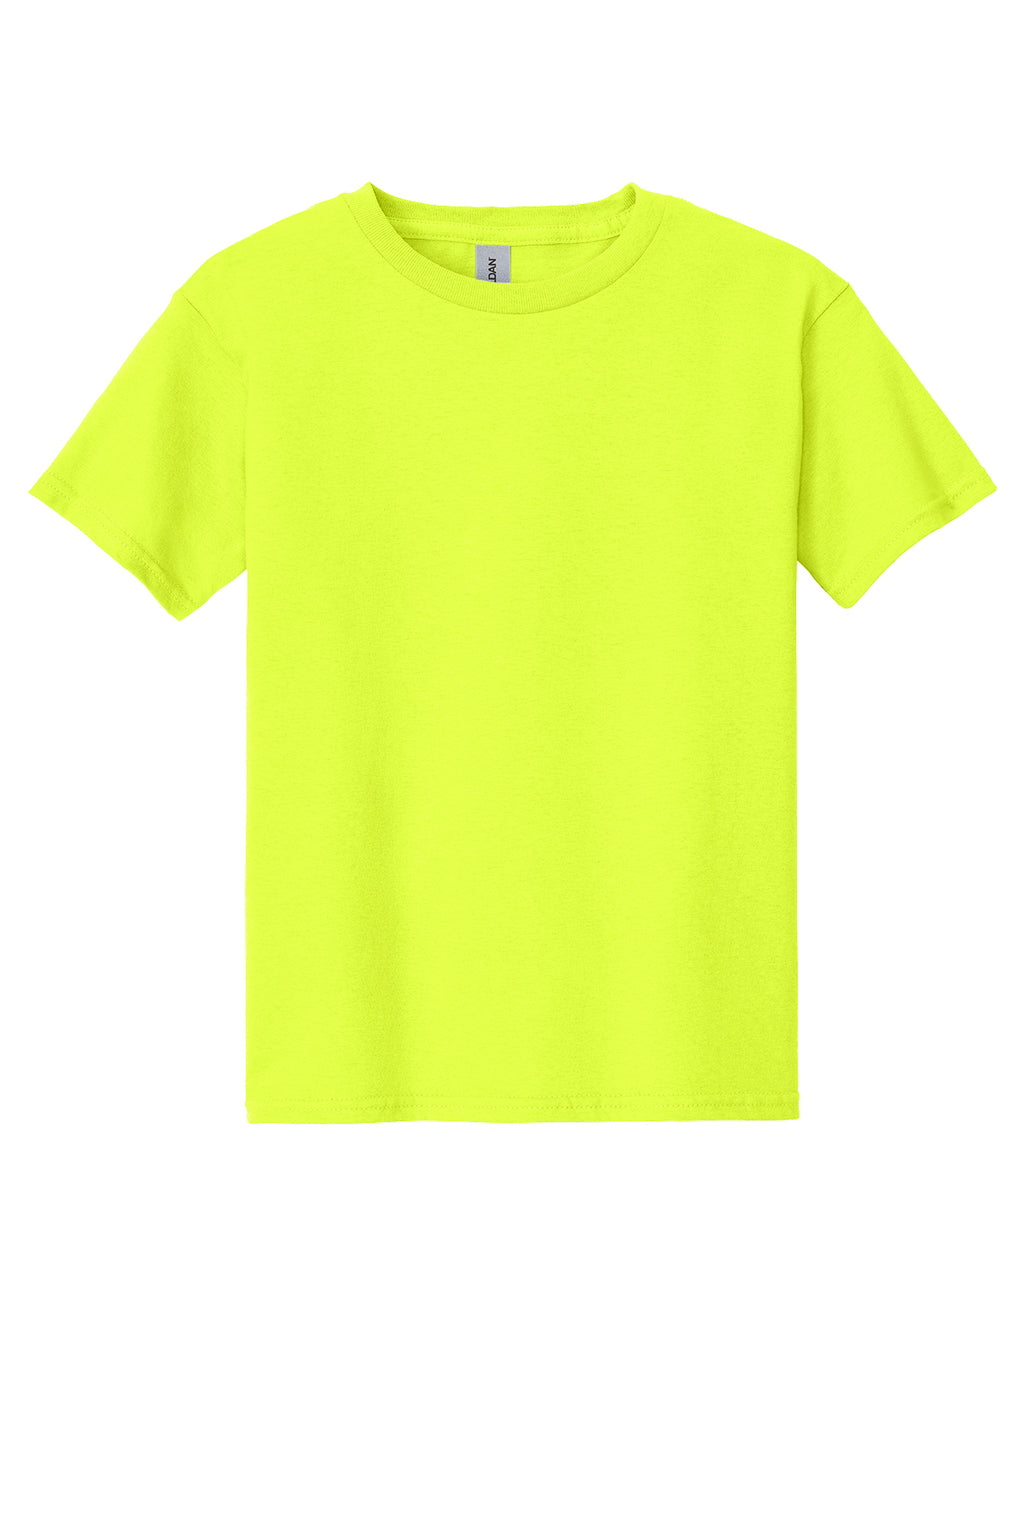 Gildan Youth S/S Shirts Safety Green